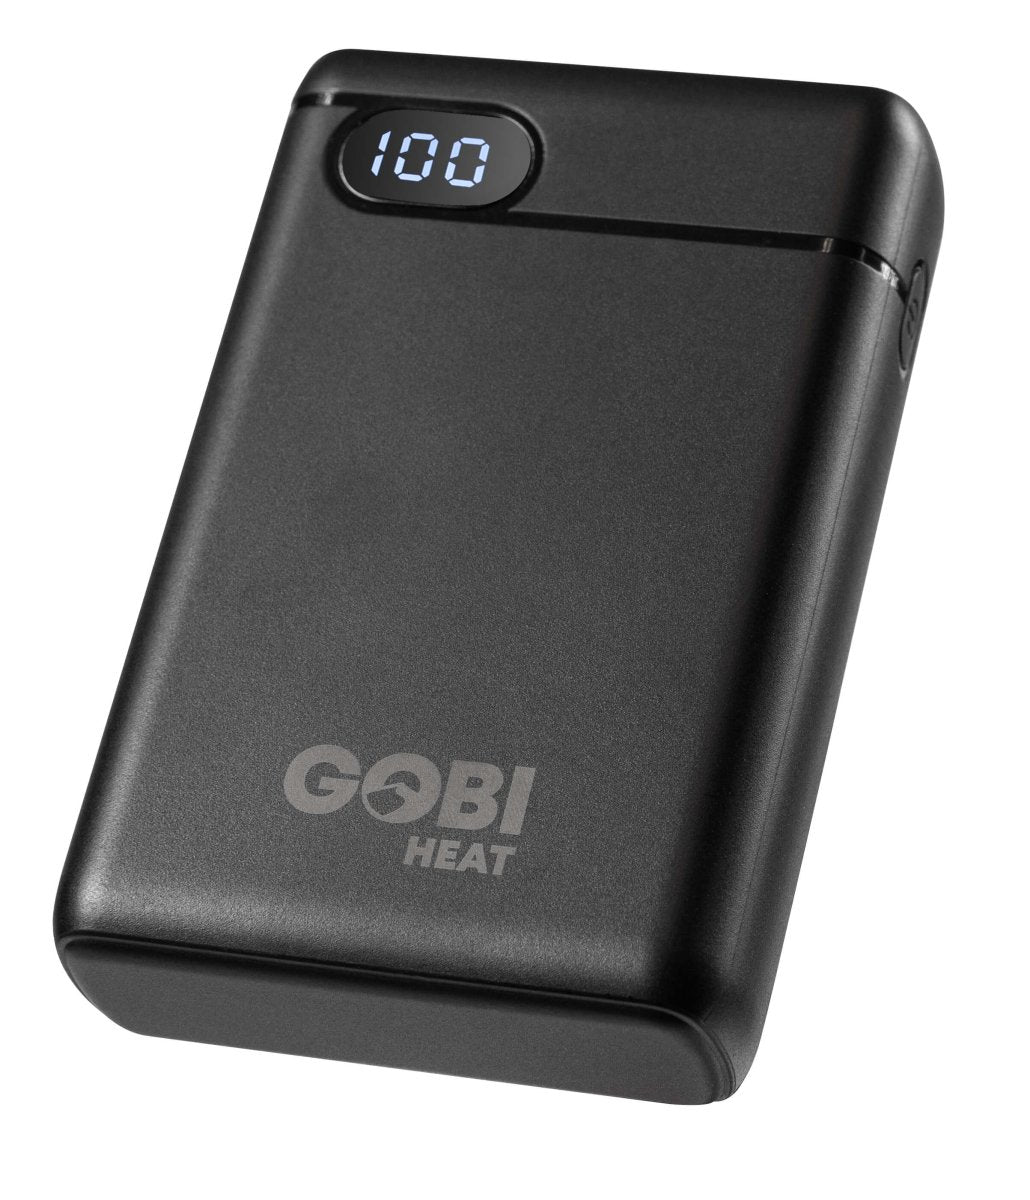 Gobi Heat - Baselayer Battery Unisex - Battery - Heated Item